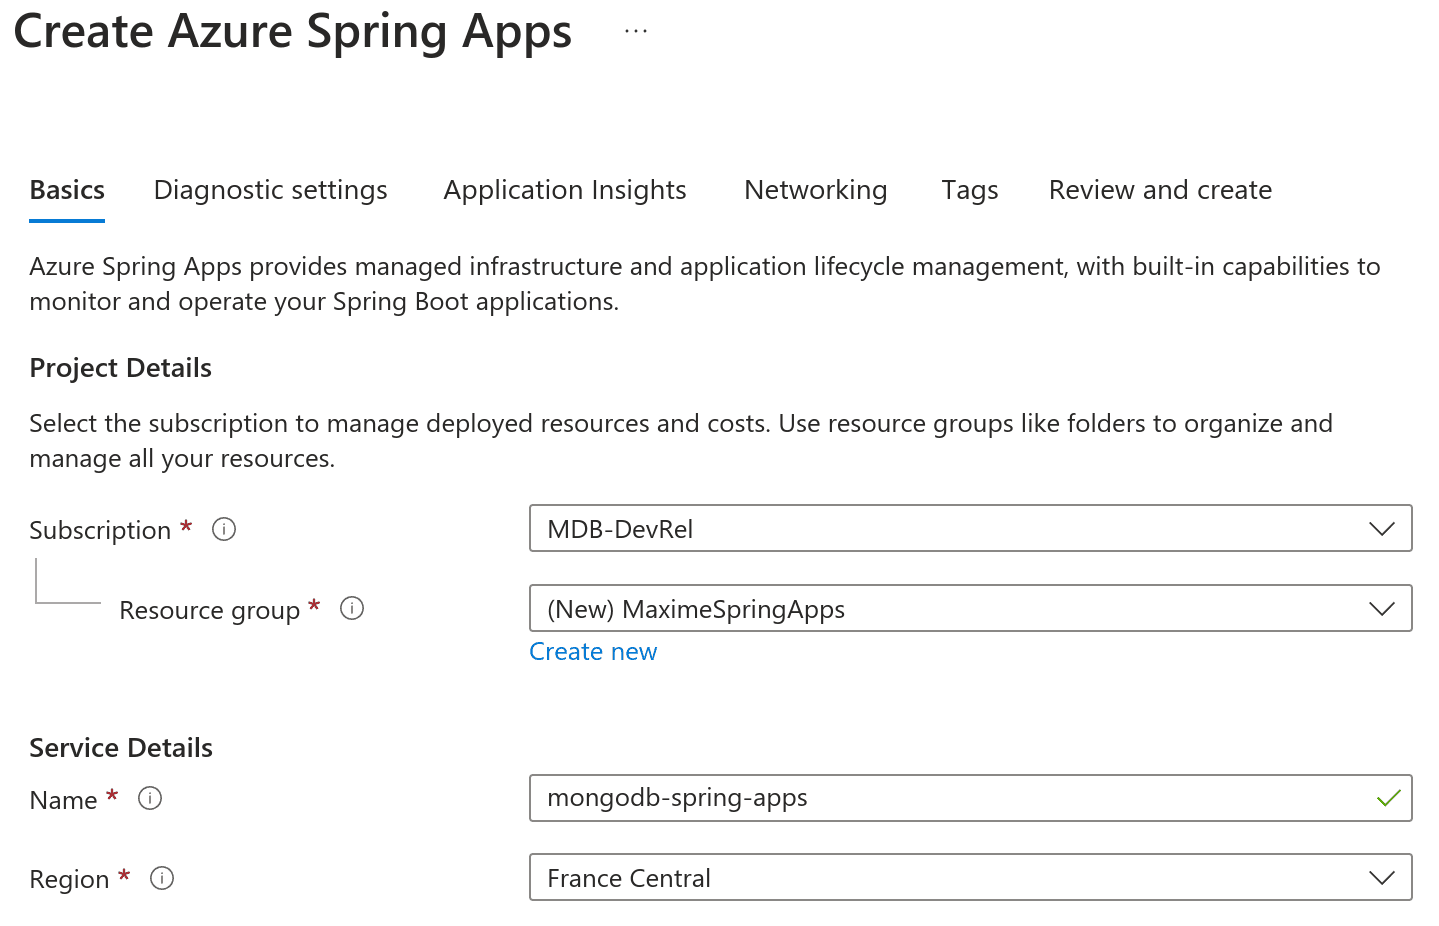 Basics to create an Azure Spring App